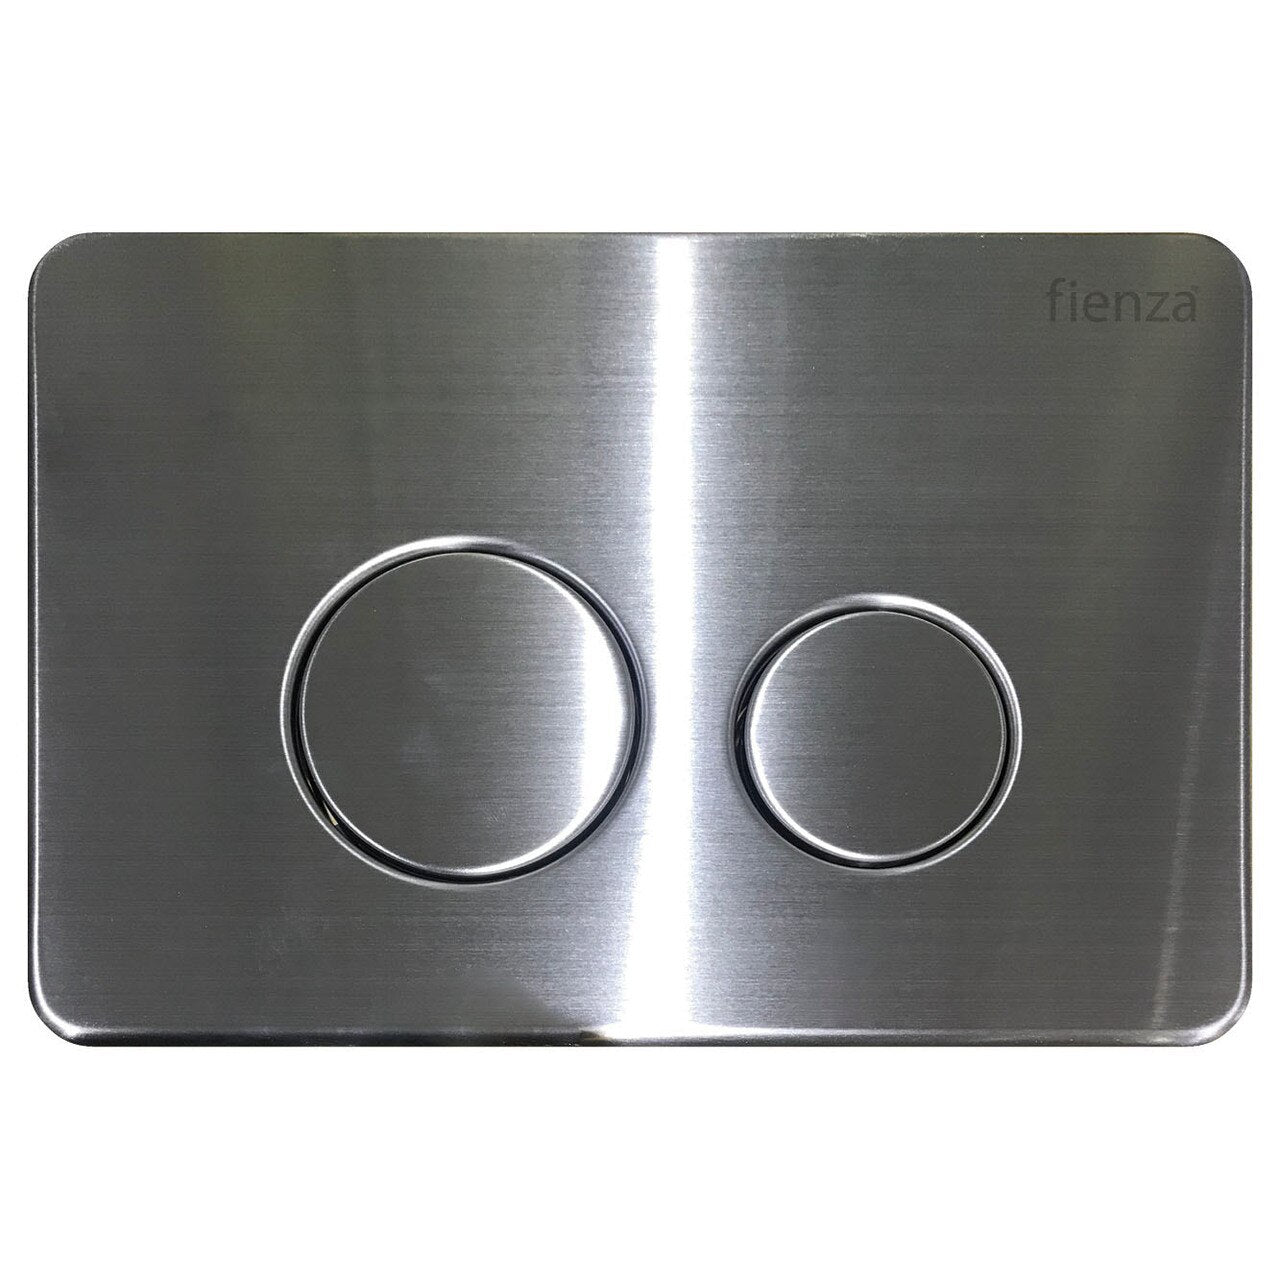 Fienza R&T Round Button Flush Plate Stainless Steel